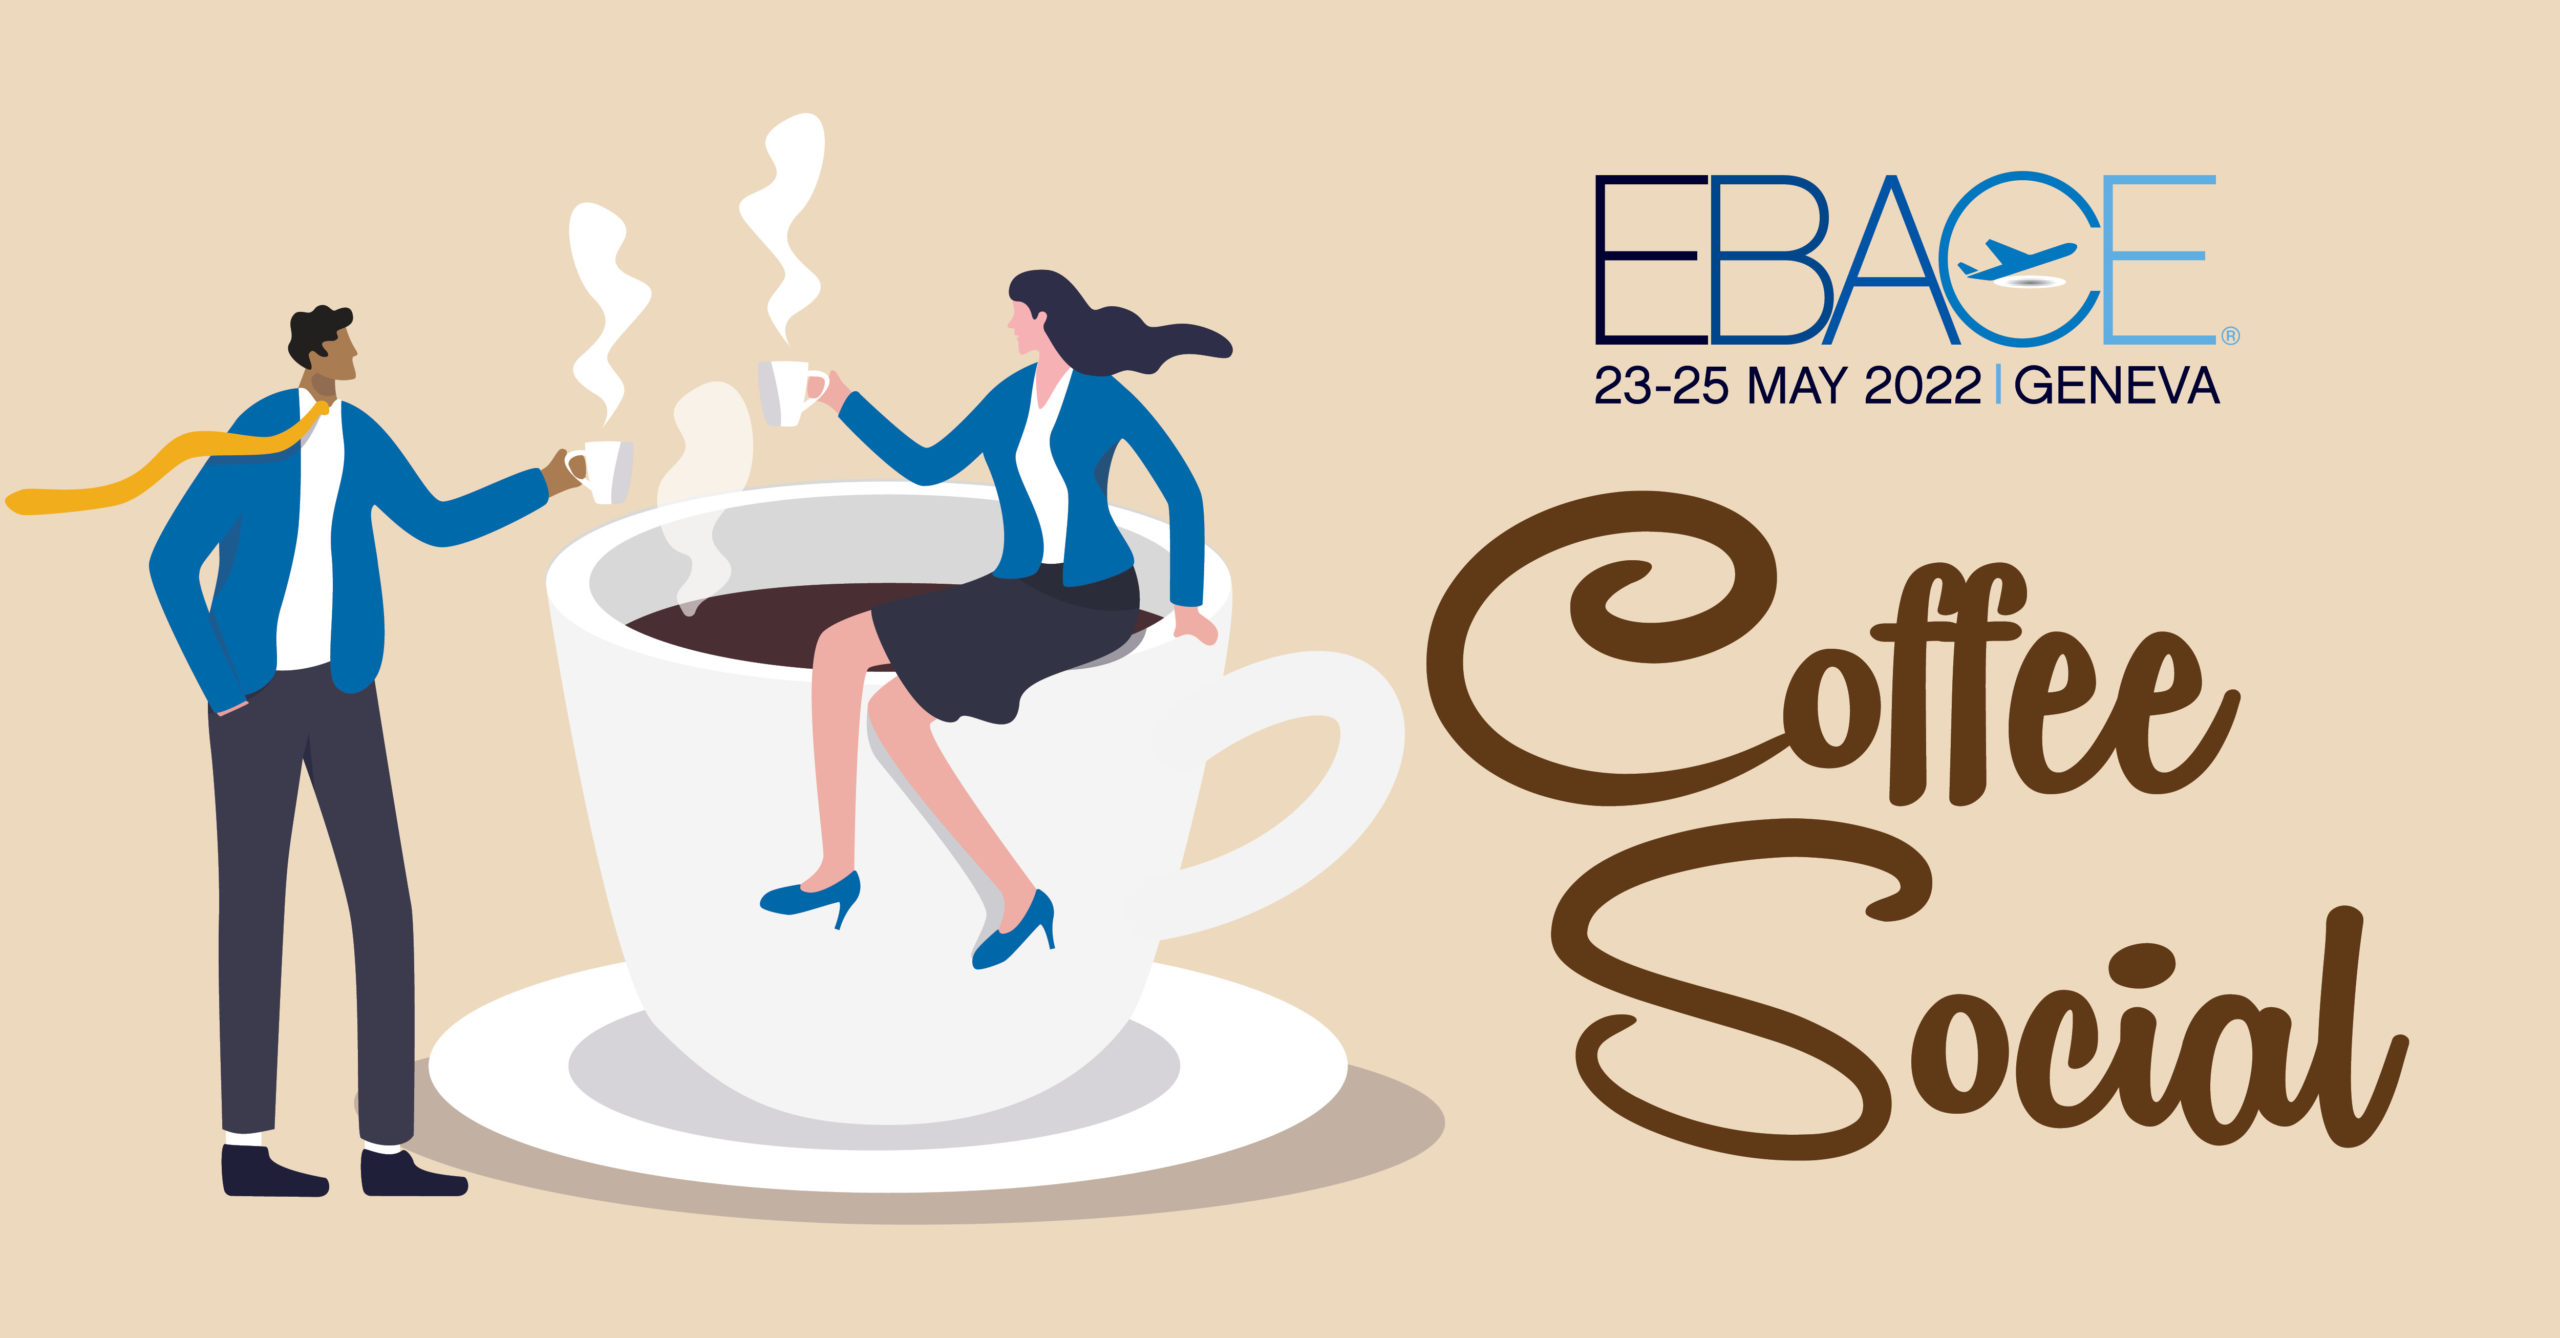 EBACE2022 Coffee Social